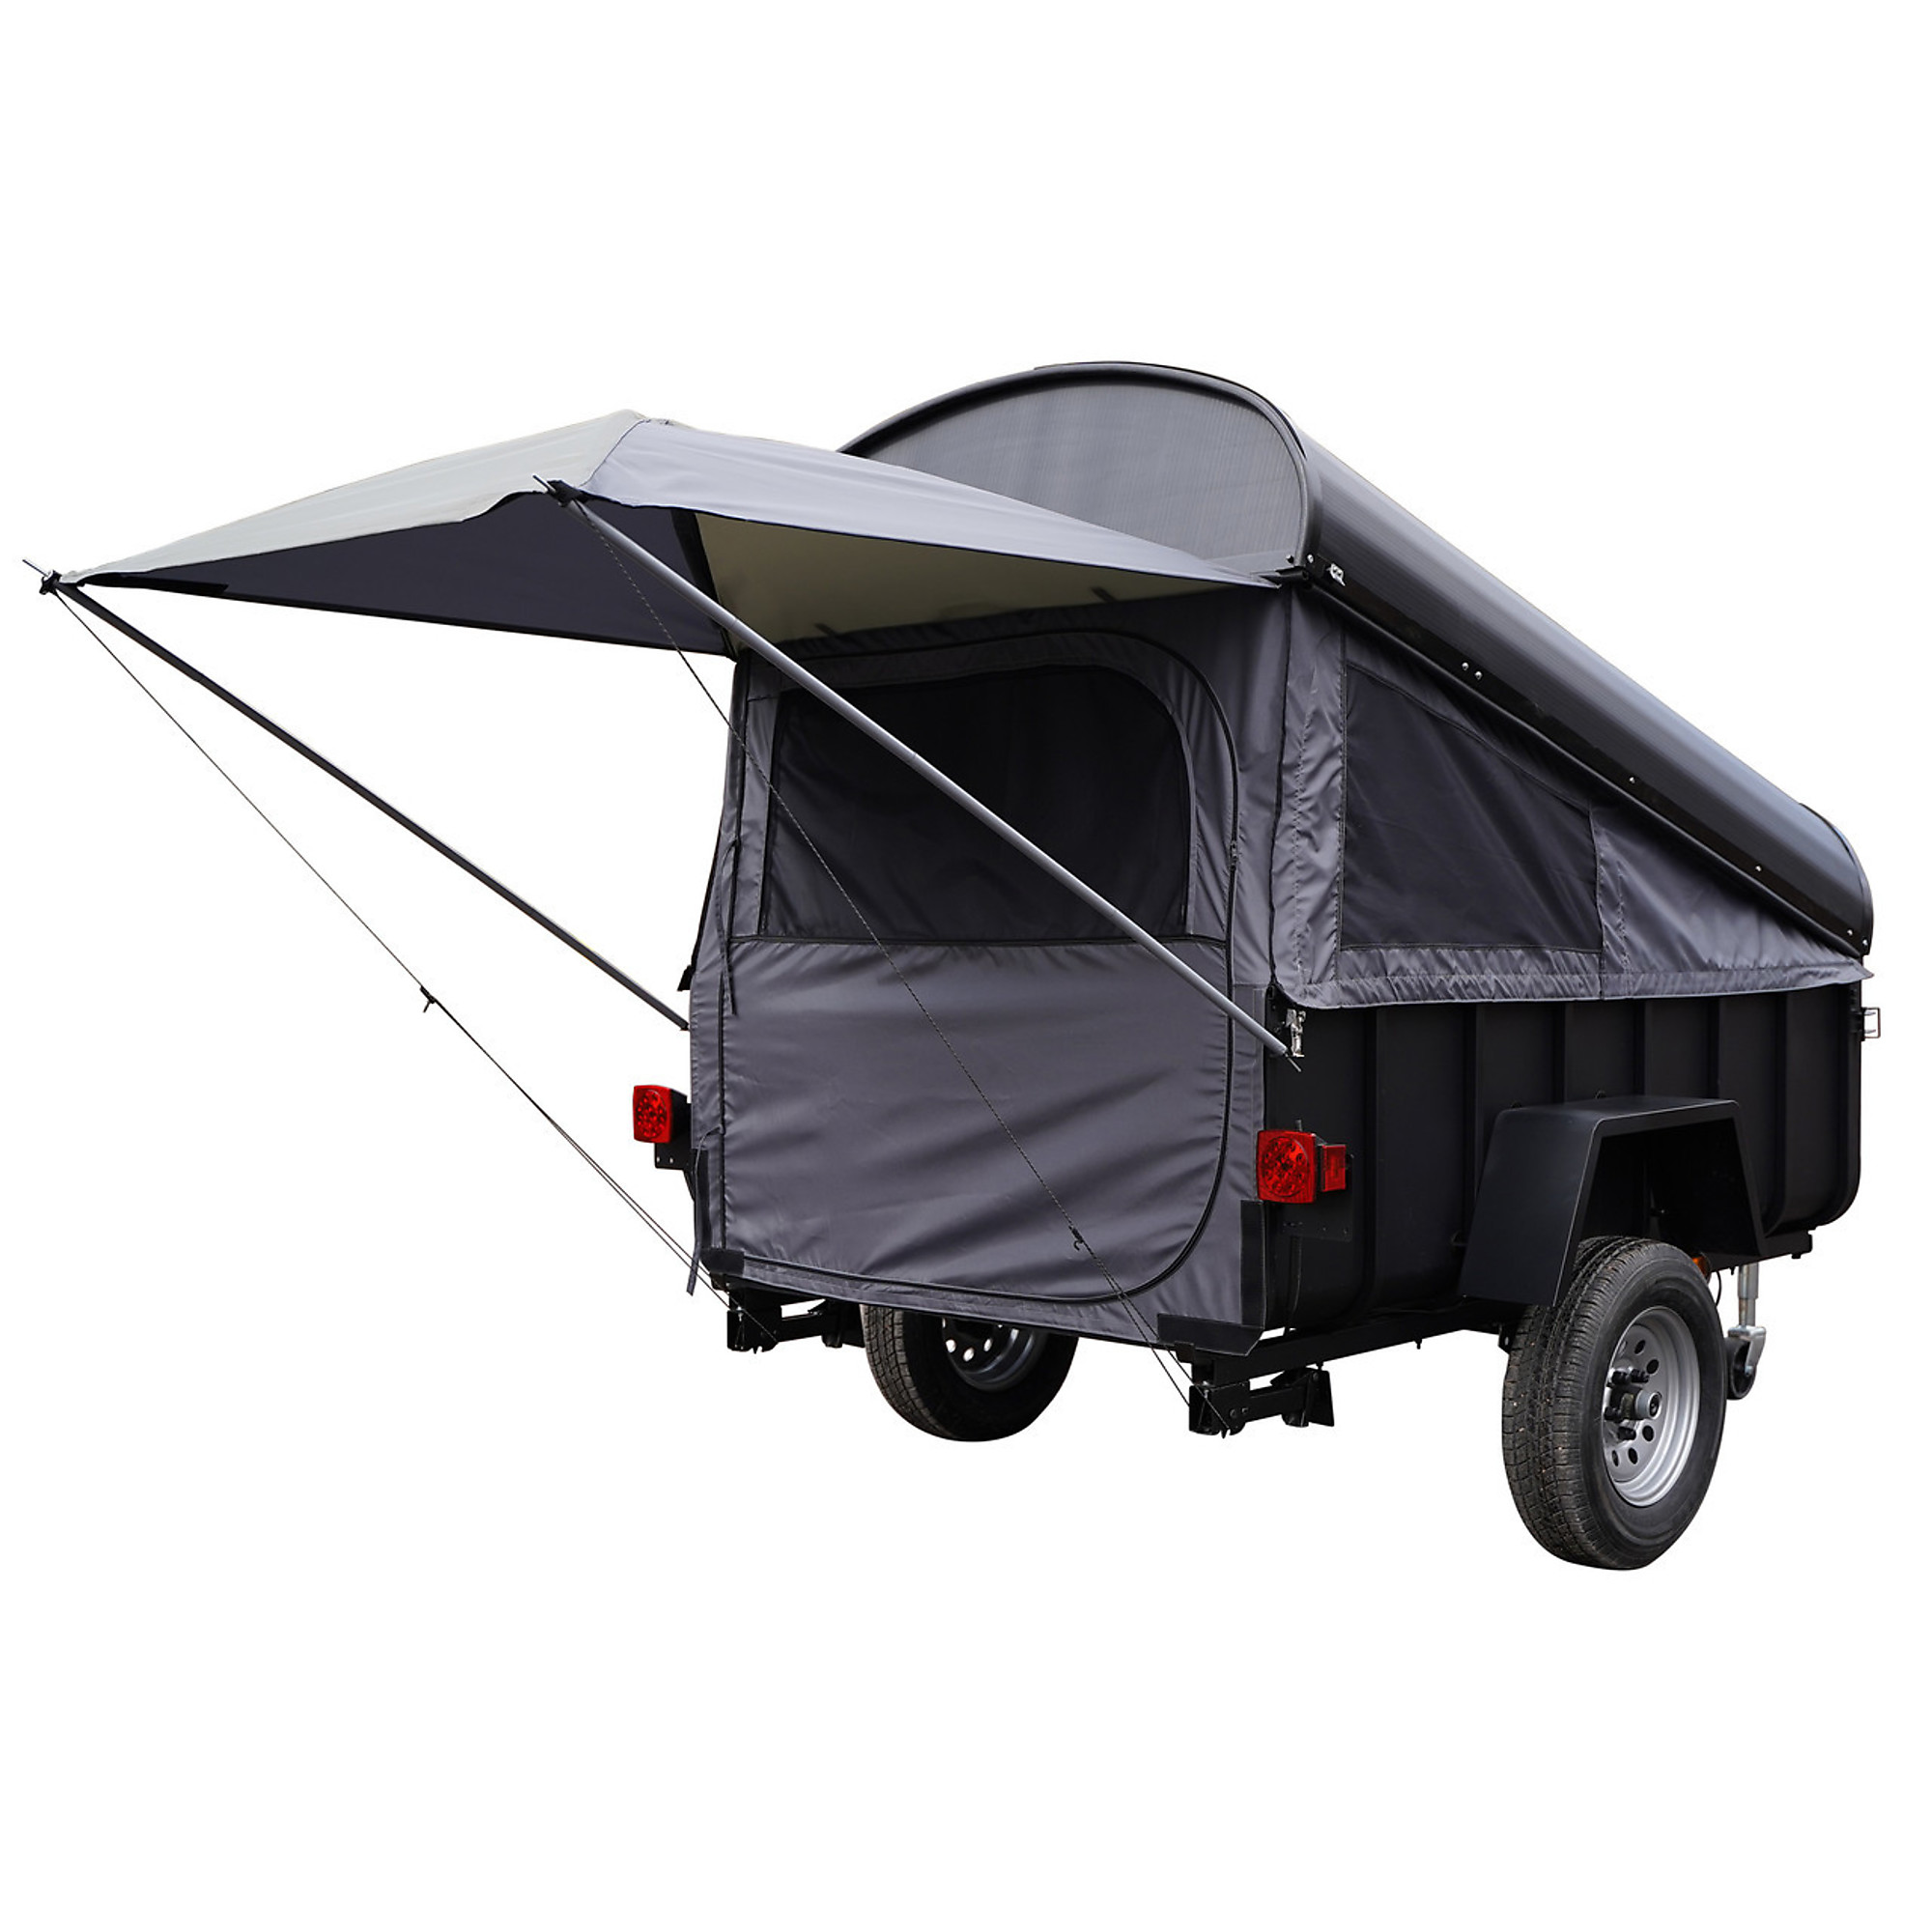 Let's Go Aero, LittleGiant CrashPad Enclosed Camping Trailer, Length 10 ft, Width 6 ft, Sleeps 2, Model T02035-01991